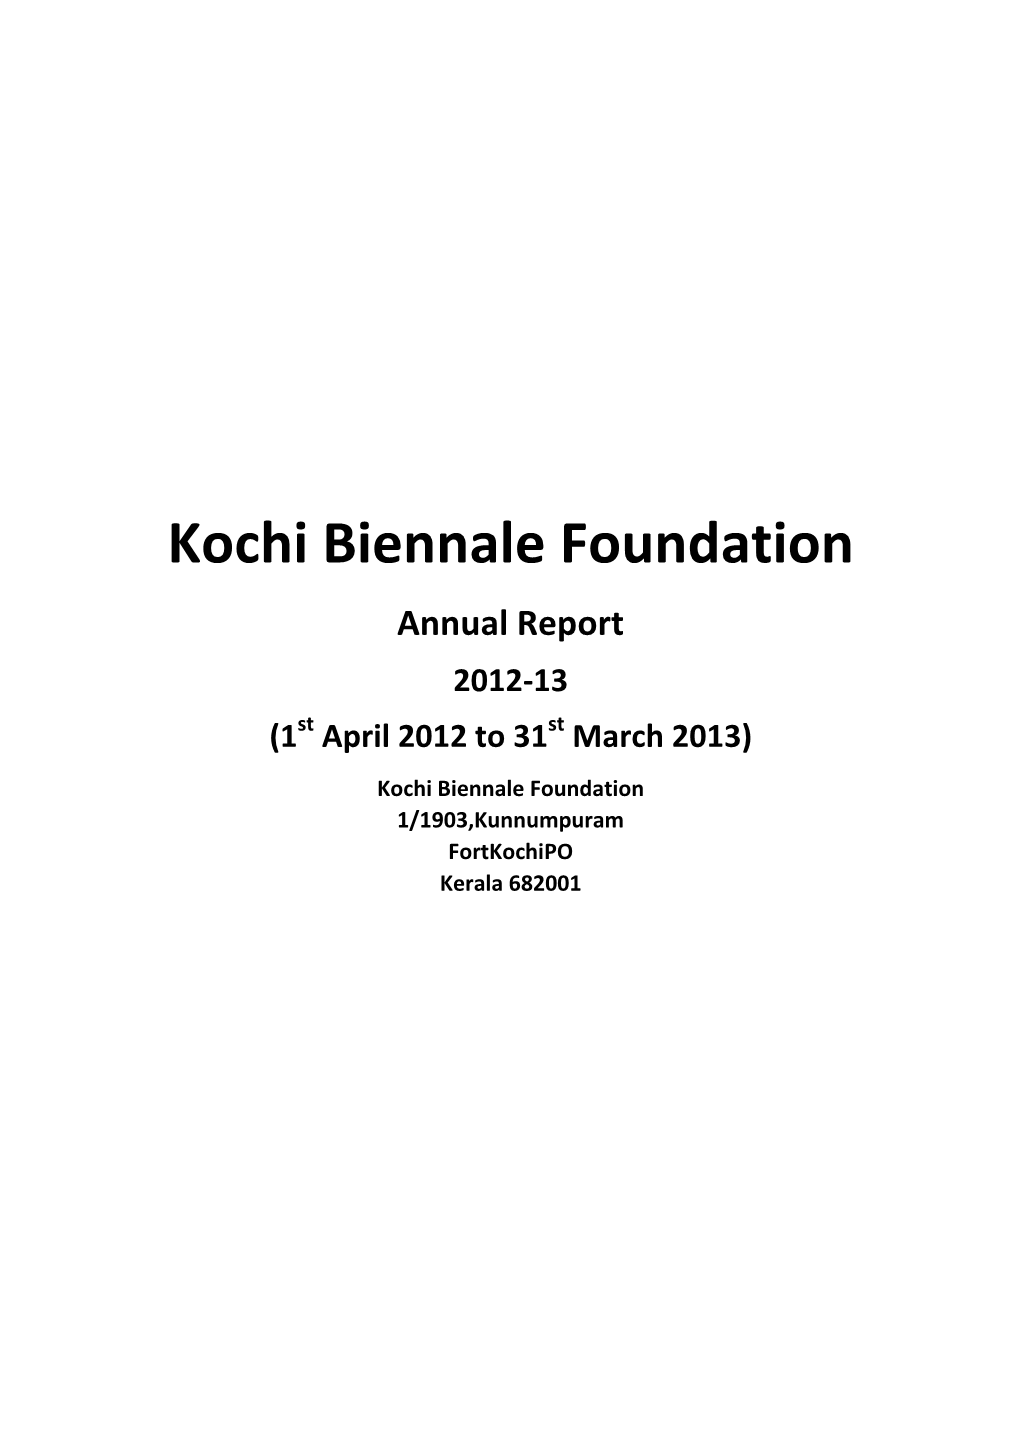 Kochi Biennale Foundation Annual Report 2012-13 (1St April 2012 to 31St March 2013) Kochi Biennale Foundation 1/1903,Kunnumpuram Fortkochipo Kerala 682001